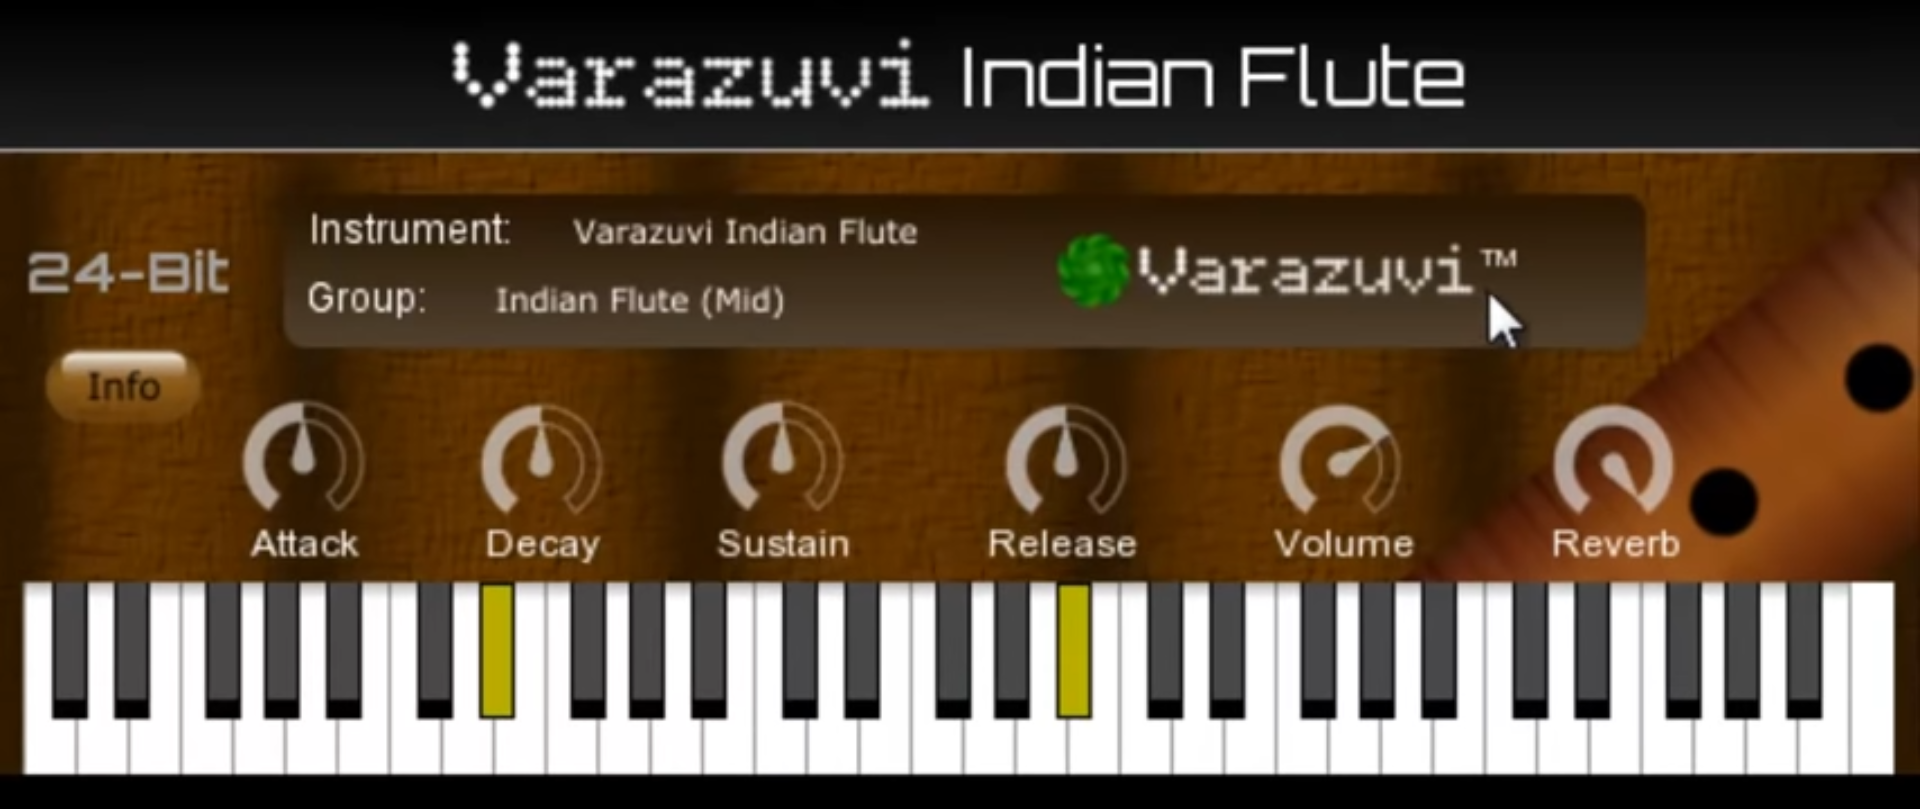 Varazuvi Indian Flute